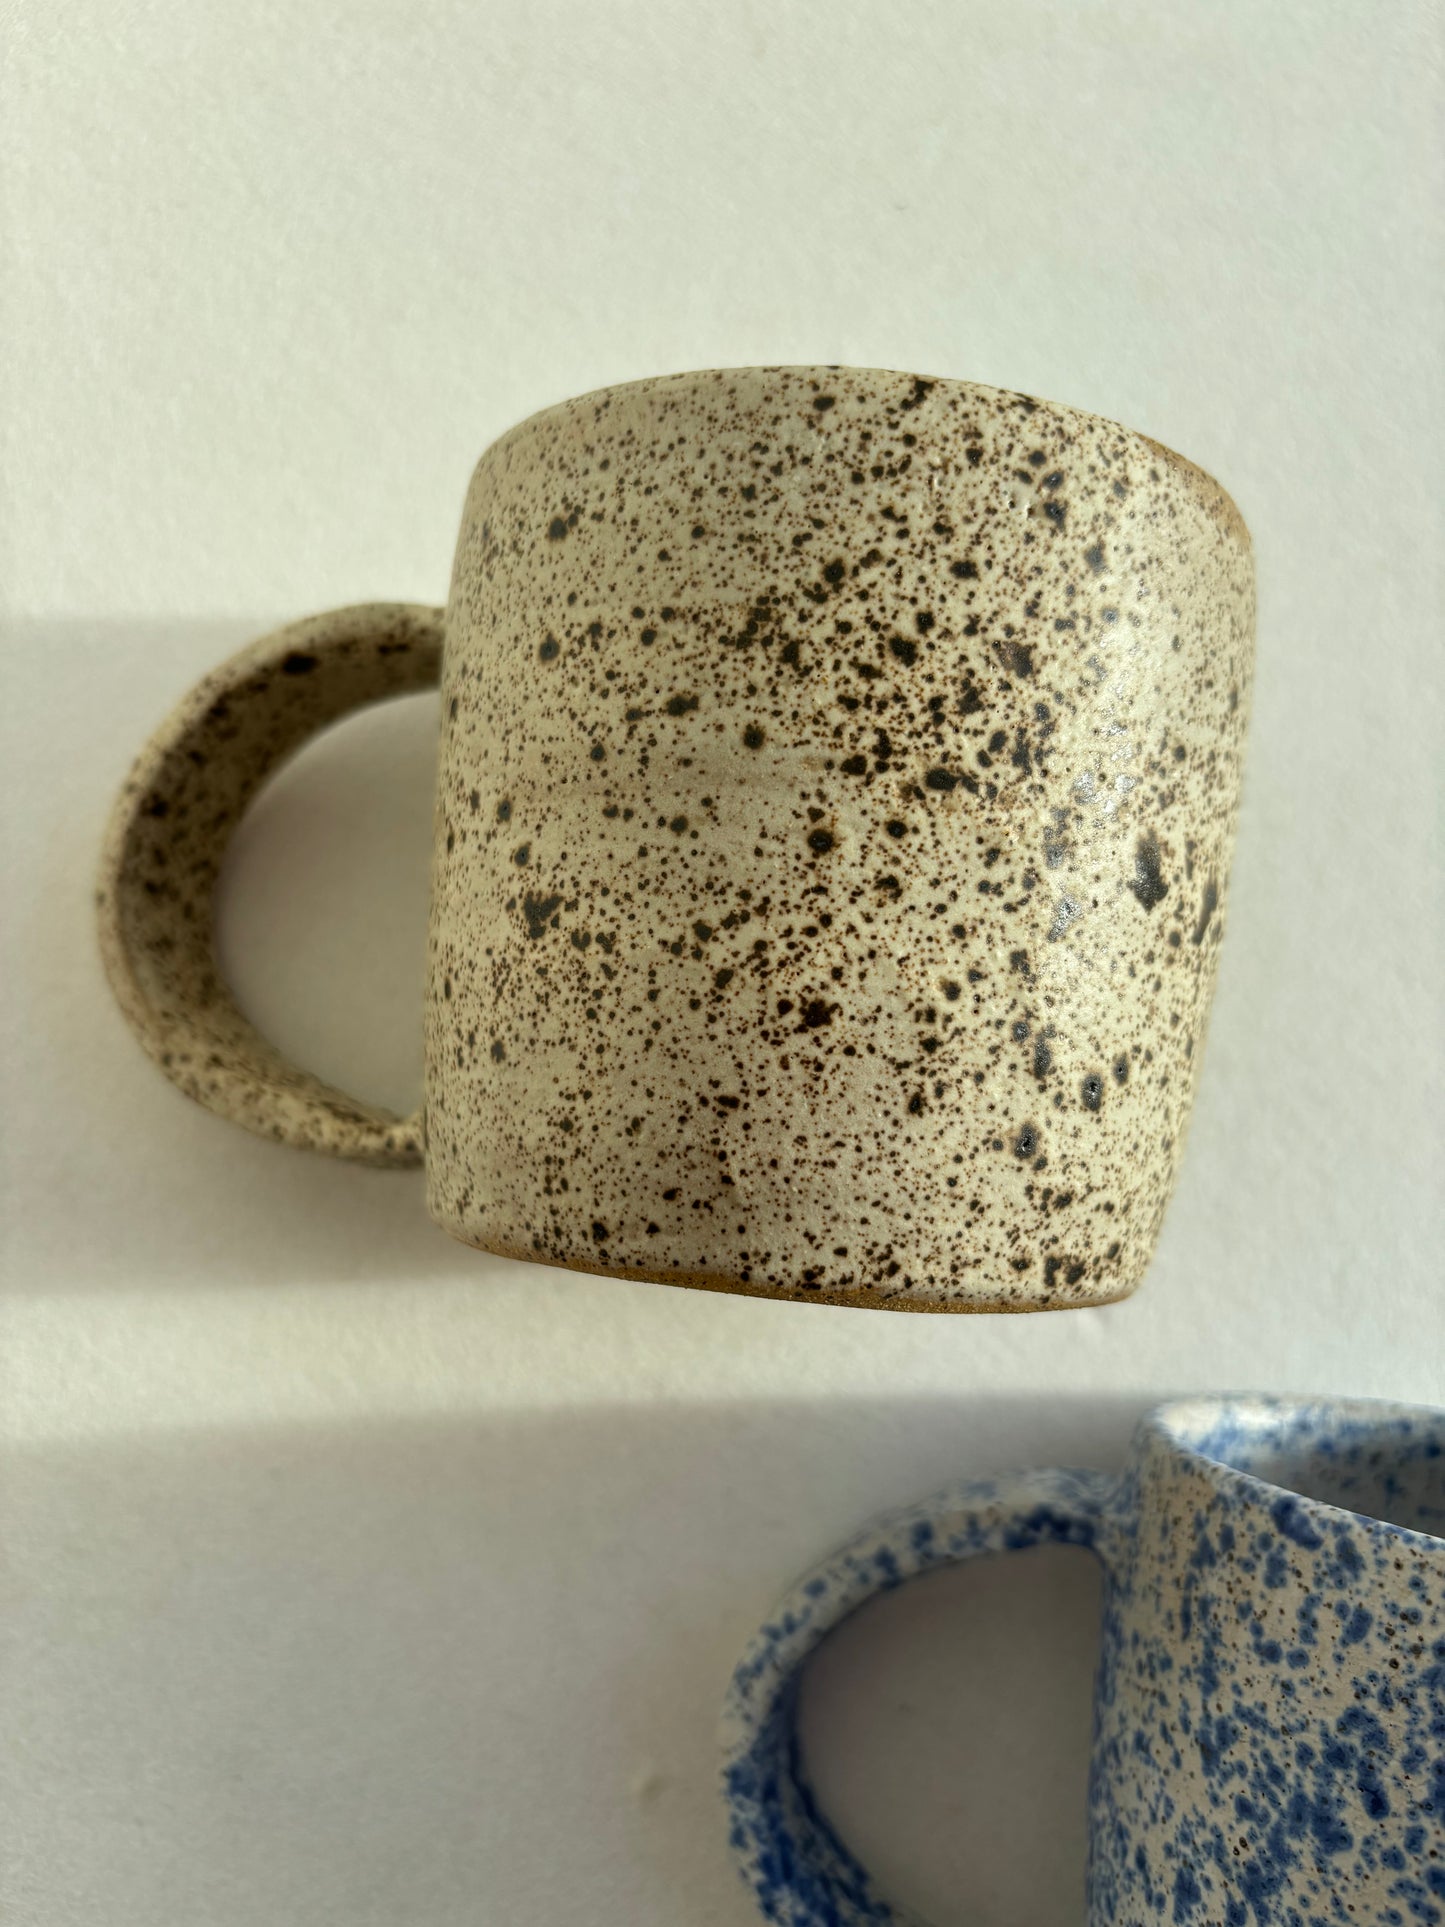 Handmade Speckle Mug